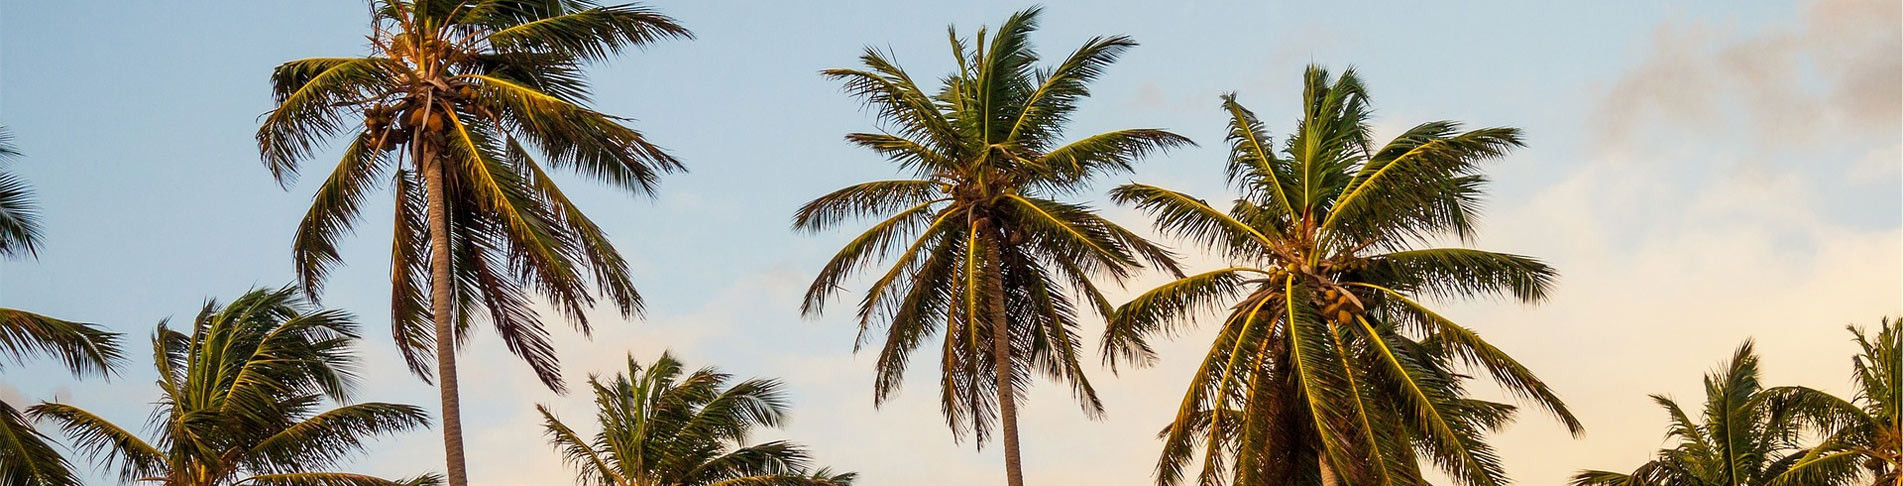 Strandurlaub Karibik unter Palmen